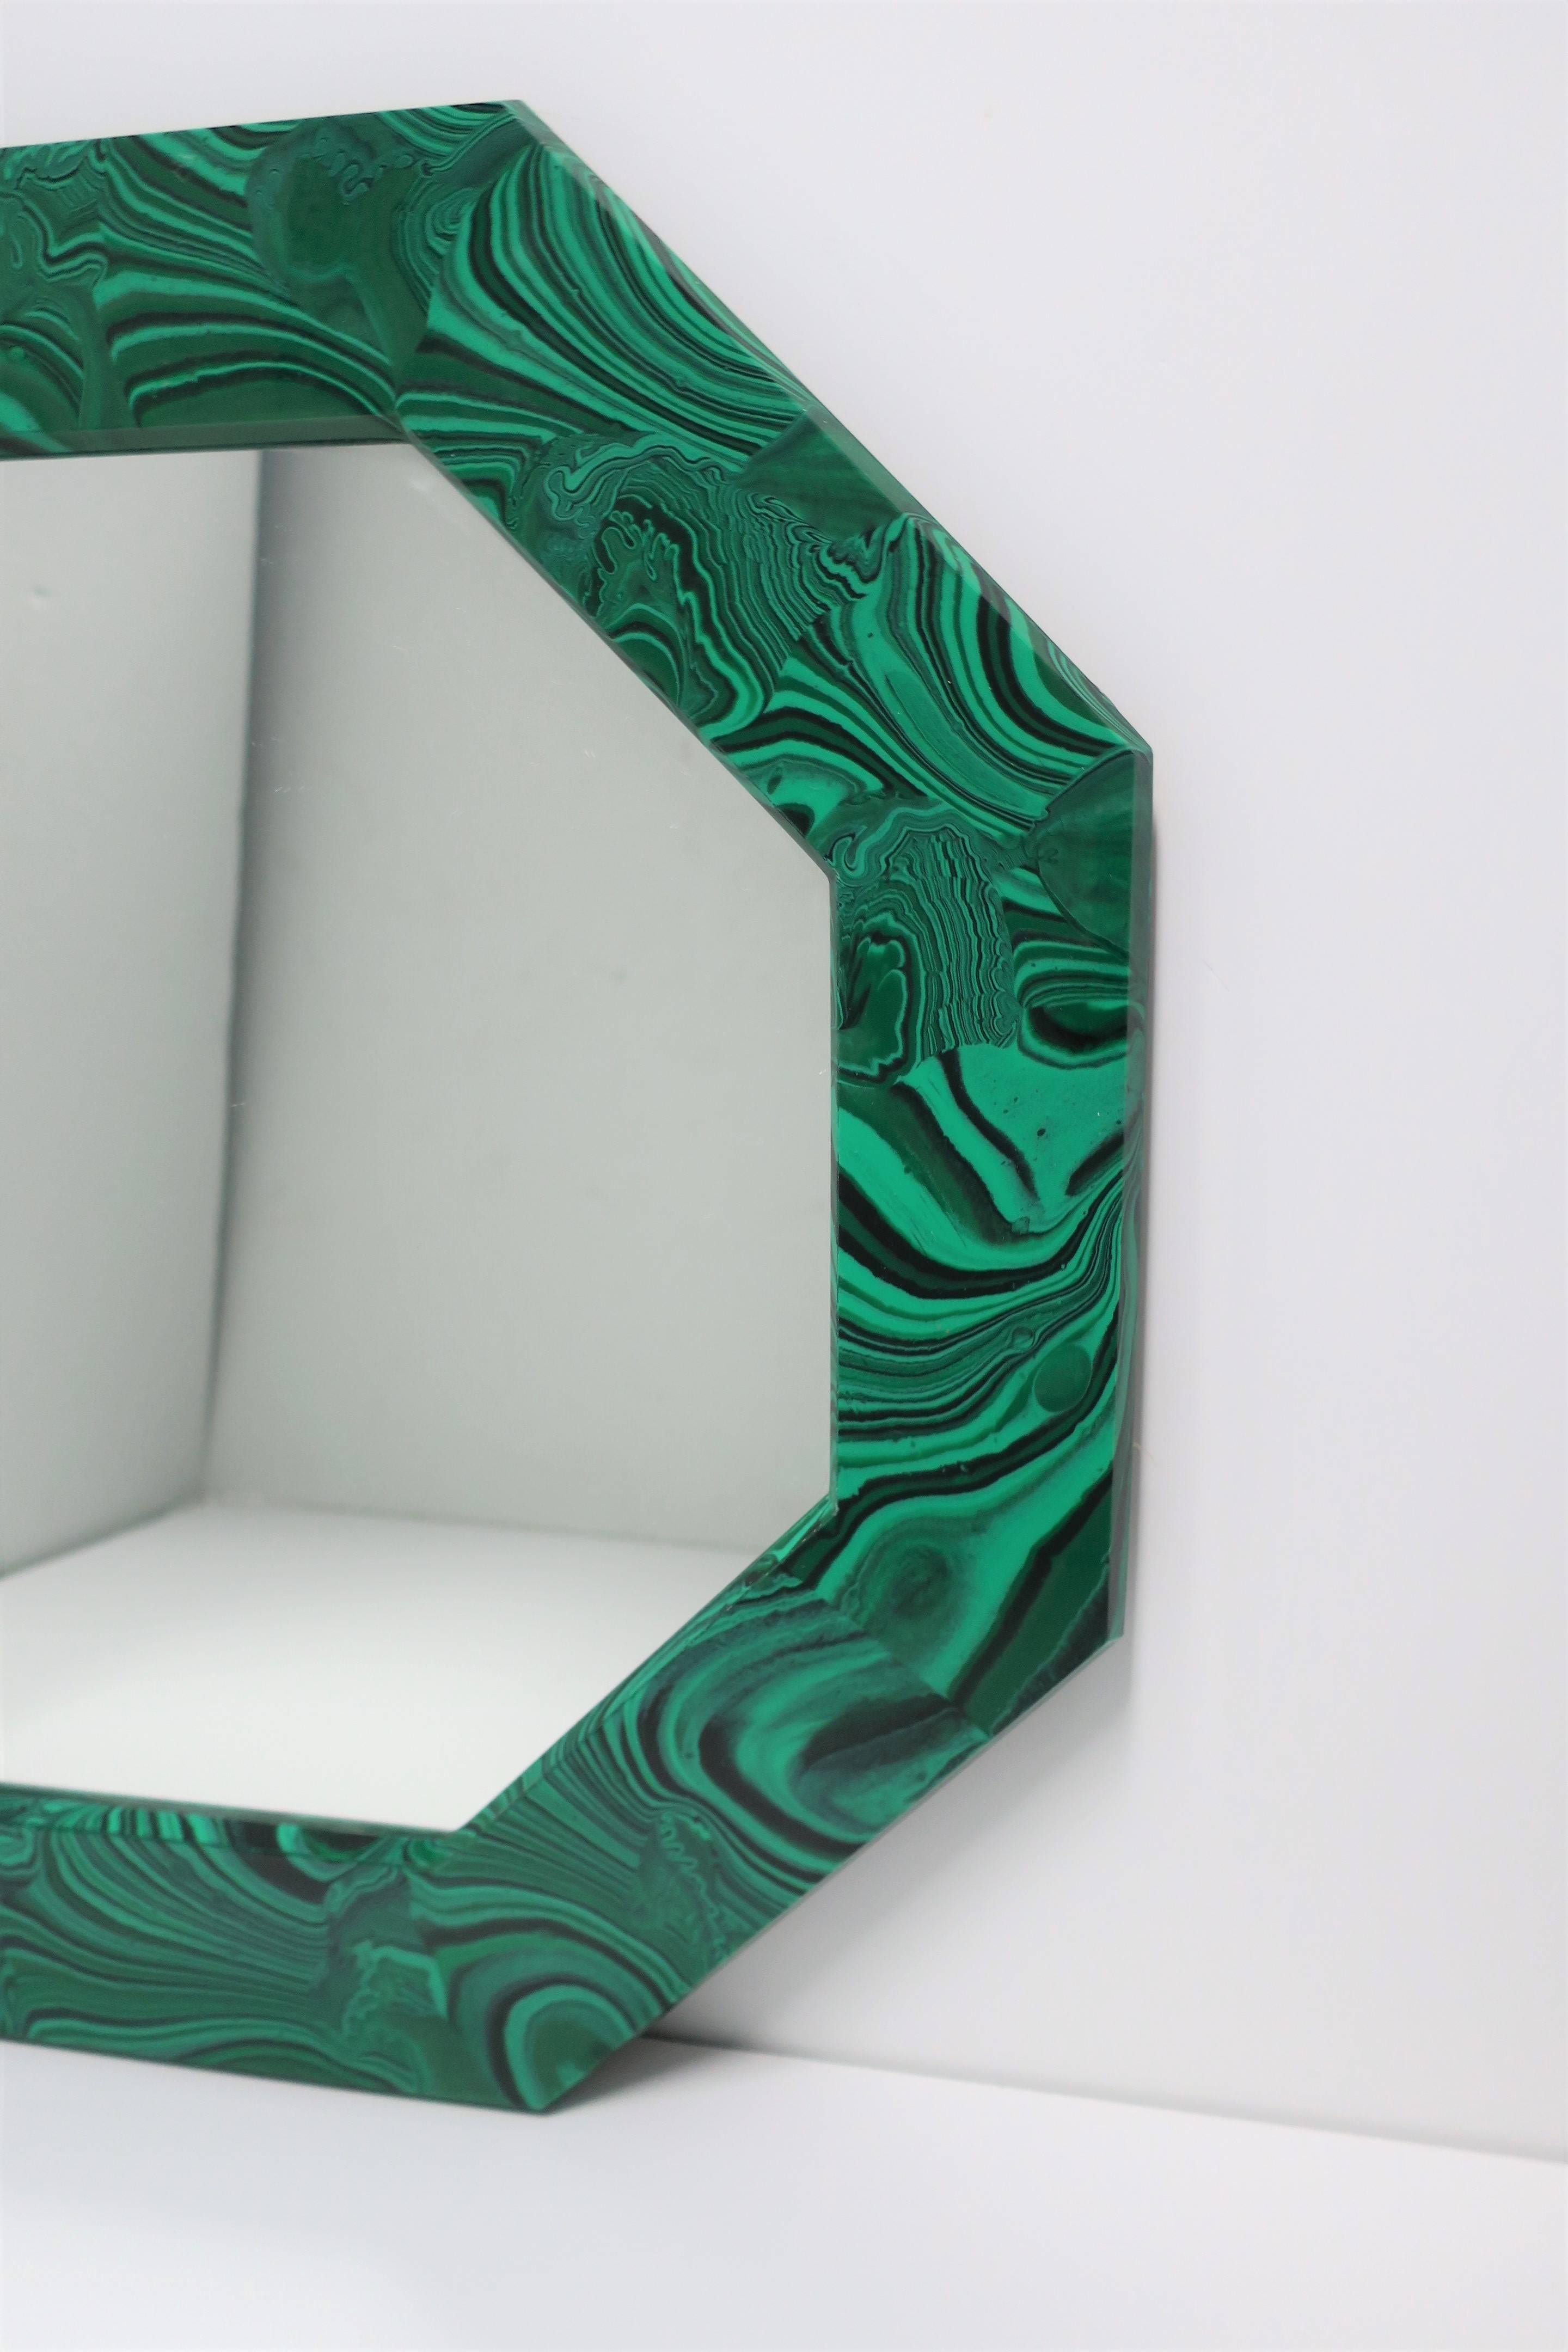 Octagonal Green Malachite Style Wall Mirror 1